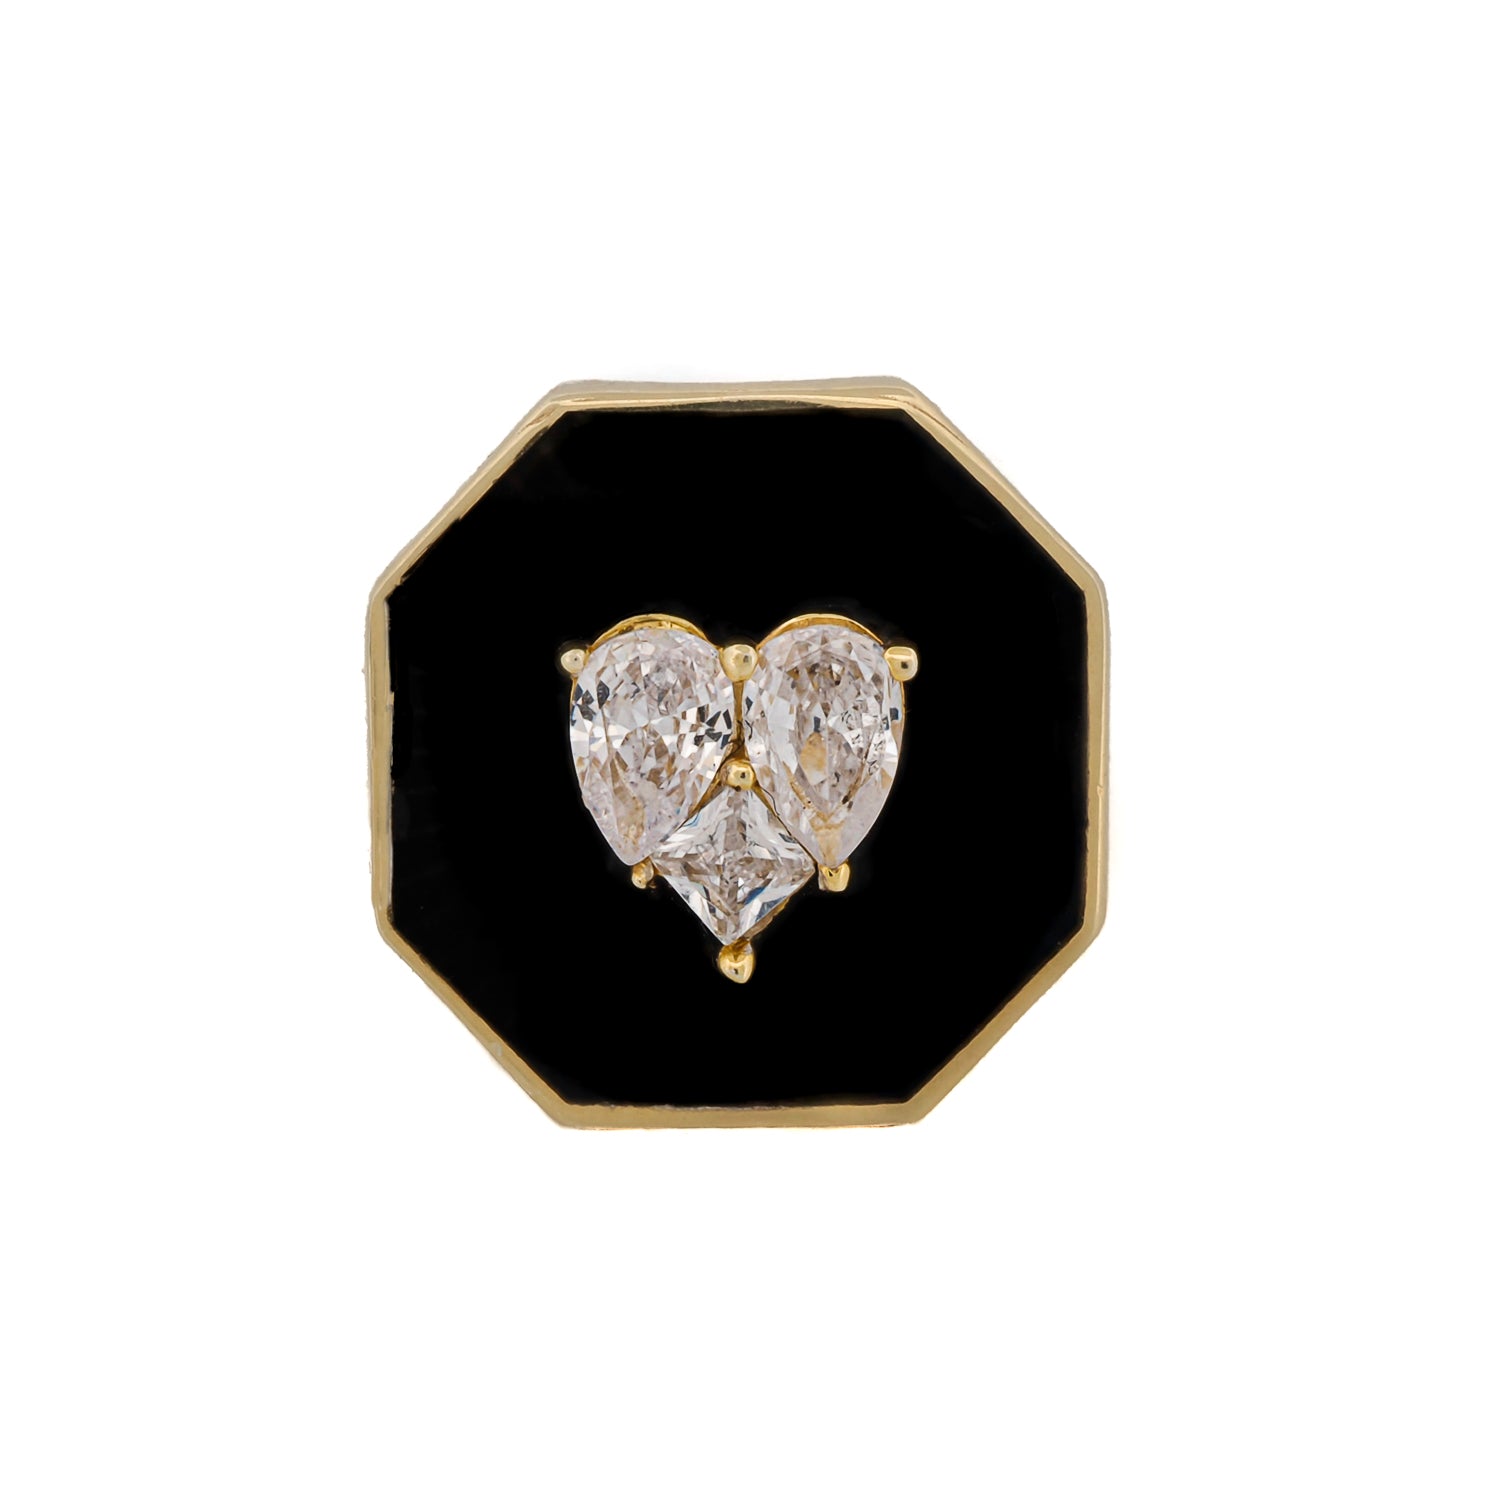 Captivating Beauty: Black Enamel Heart Gold Ring with Diamond